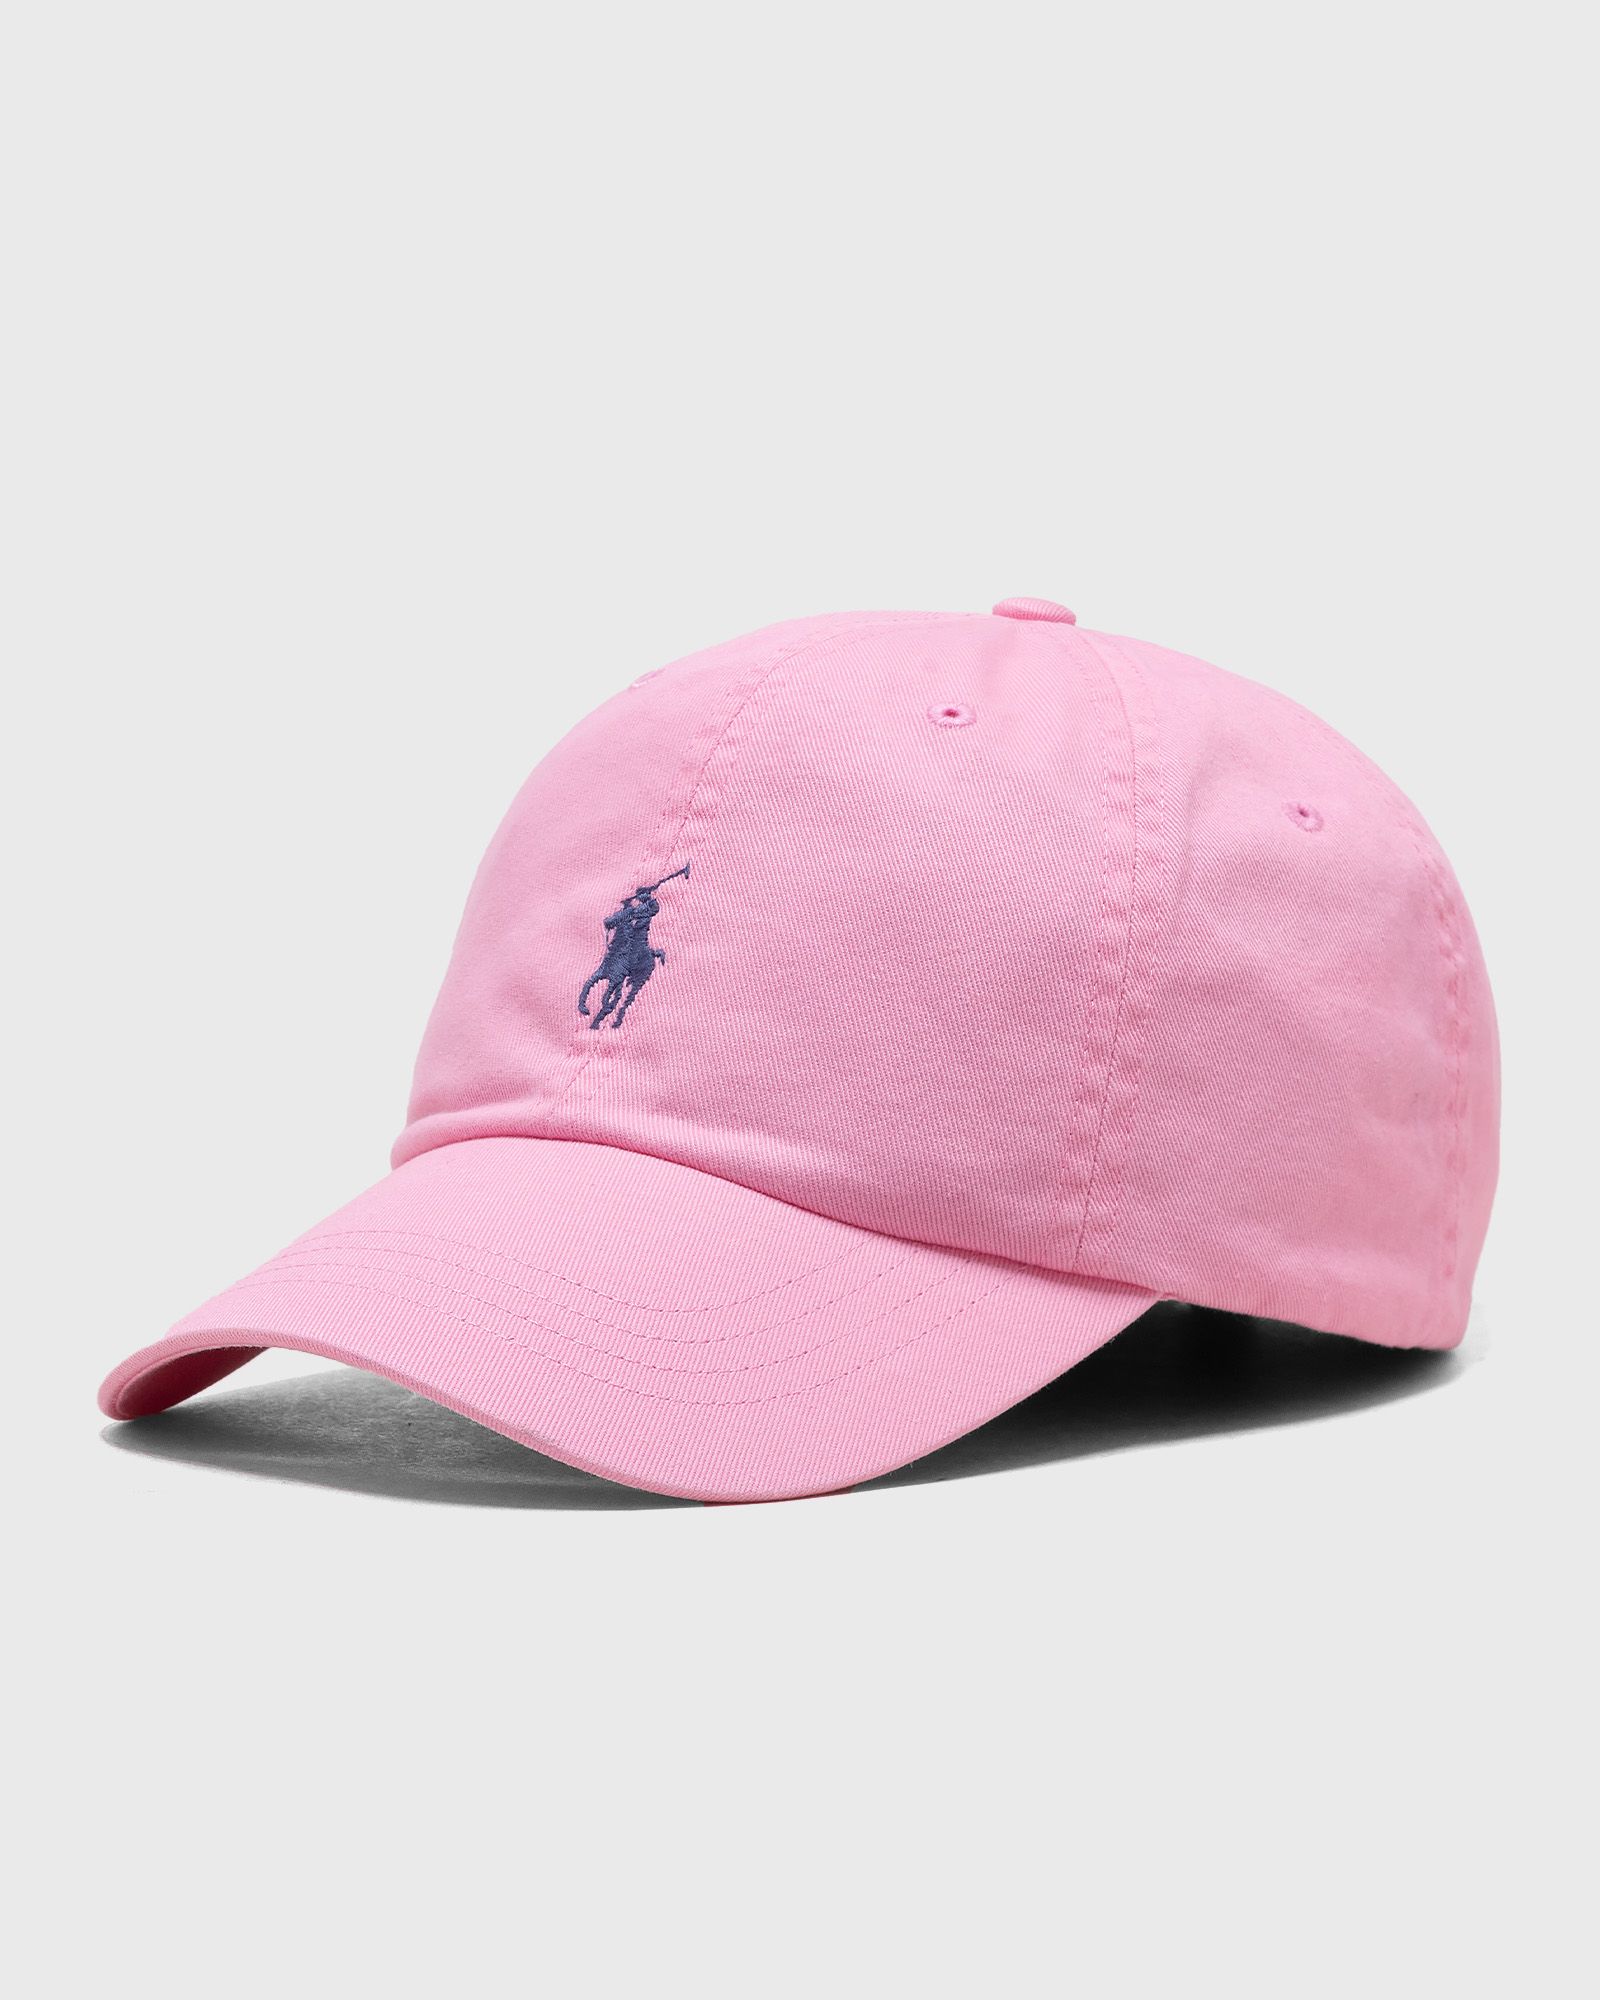 Polo Ralph Lauren - cls sprt cap-hat men caps pink in größe:one size